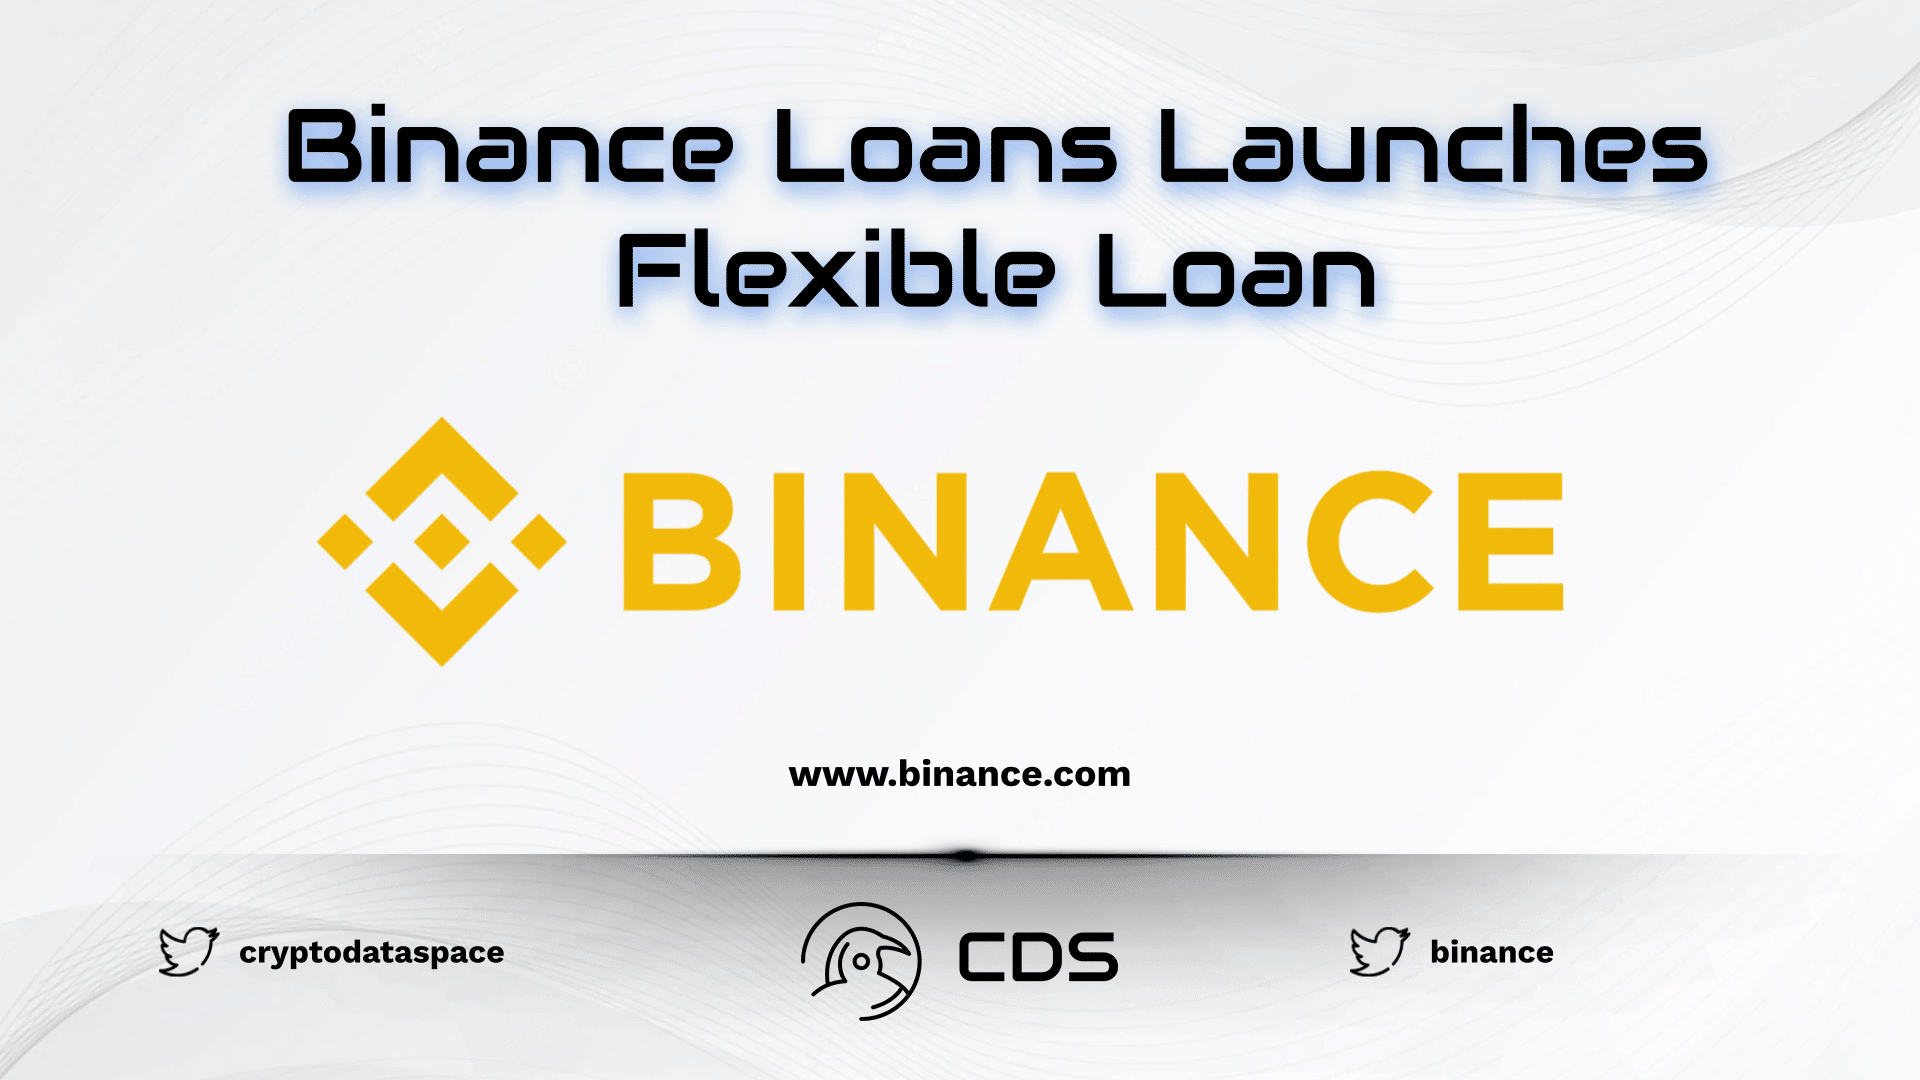 Binance Loans Launches Flexible Loan